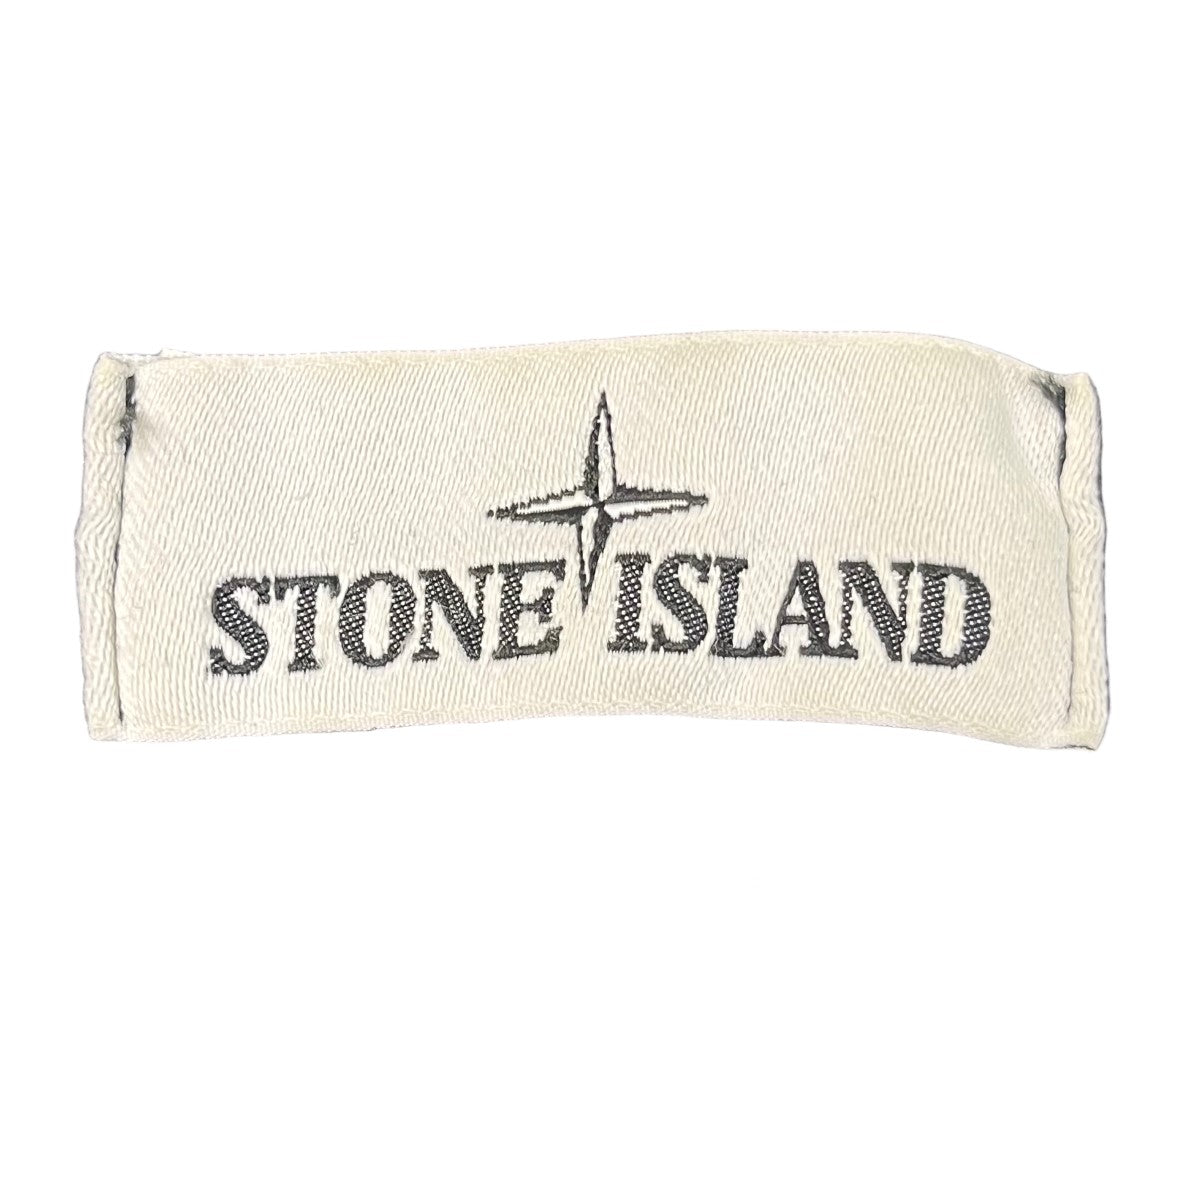 STONE ISLAND(ストーンアイランド) 2020SS 「NYLON METAL PANTS ...